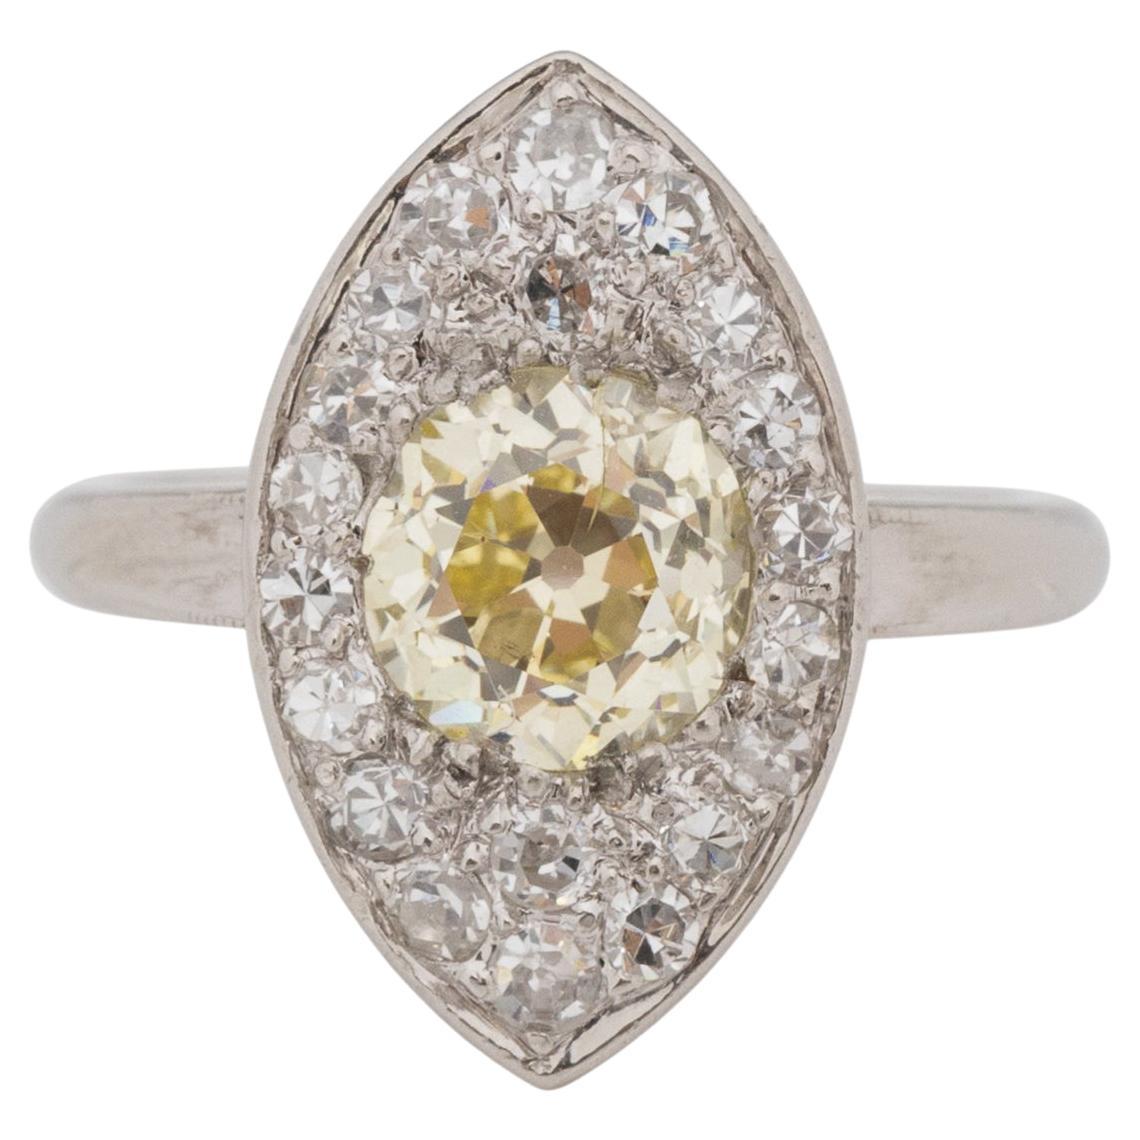 GIA Certified 1.05 Carat Art Deco Diamond Platinum Engagement Ring